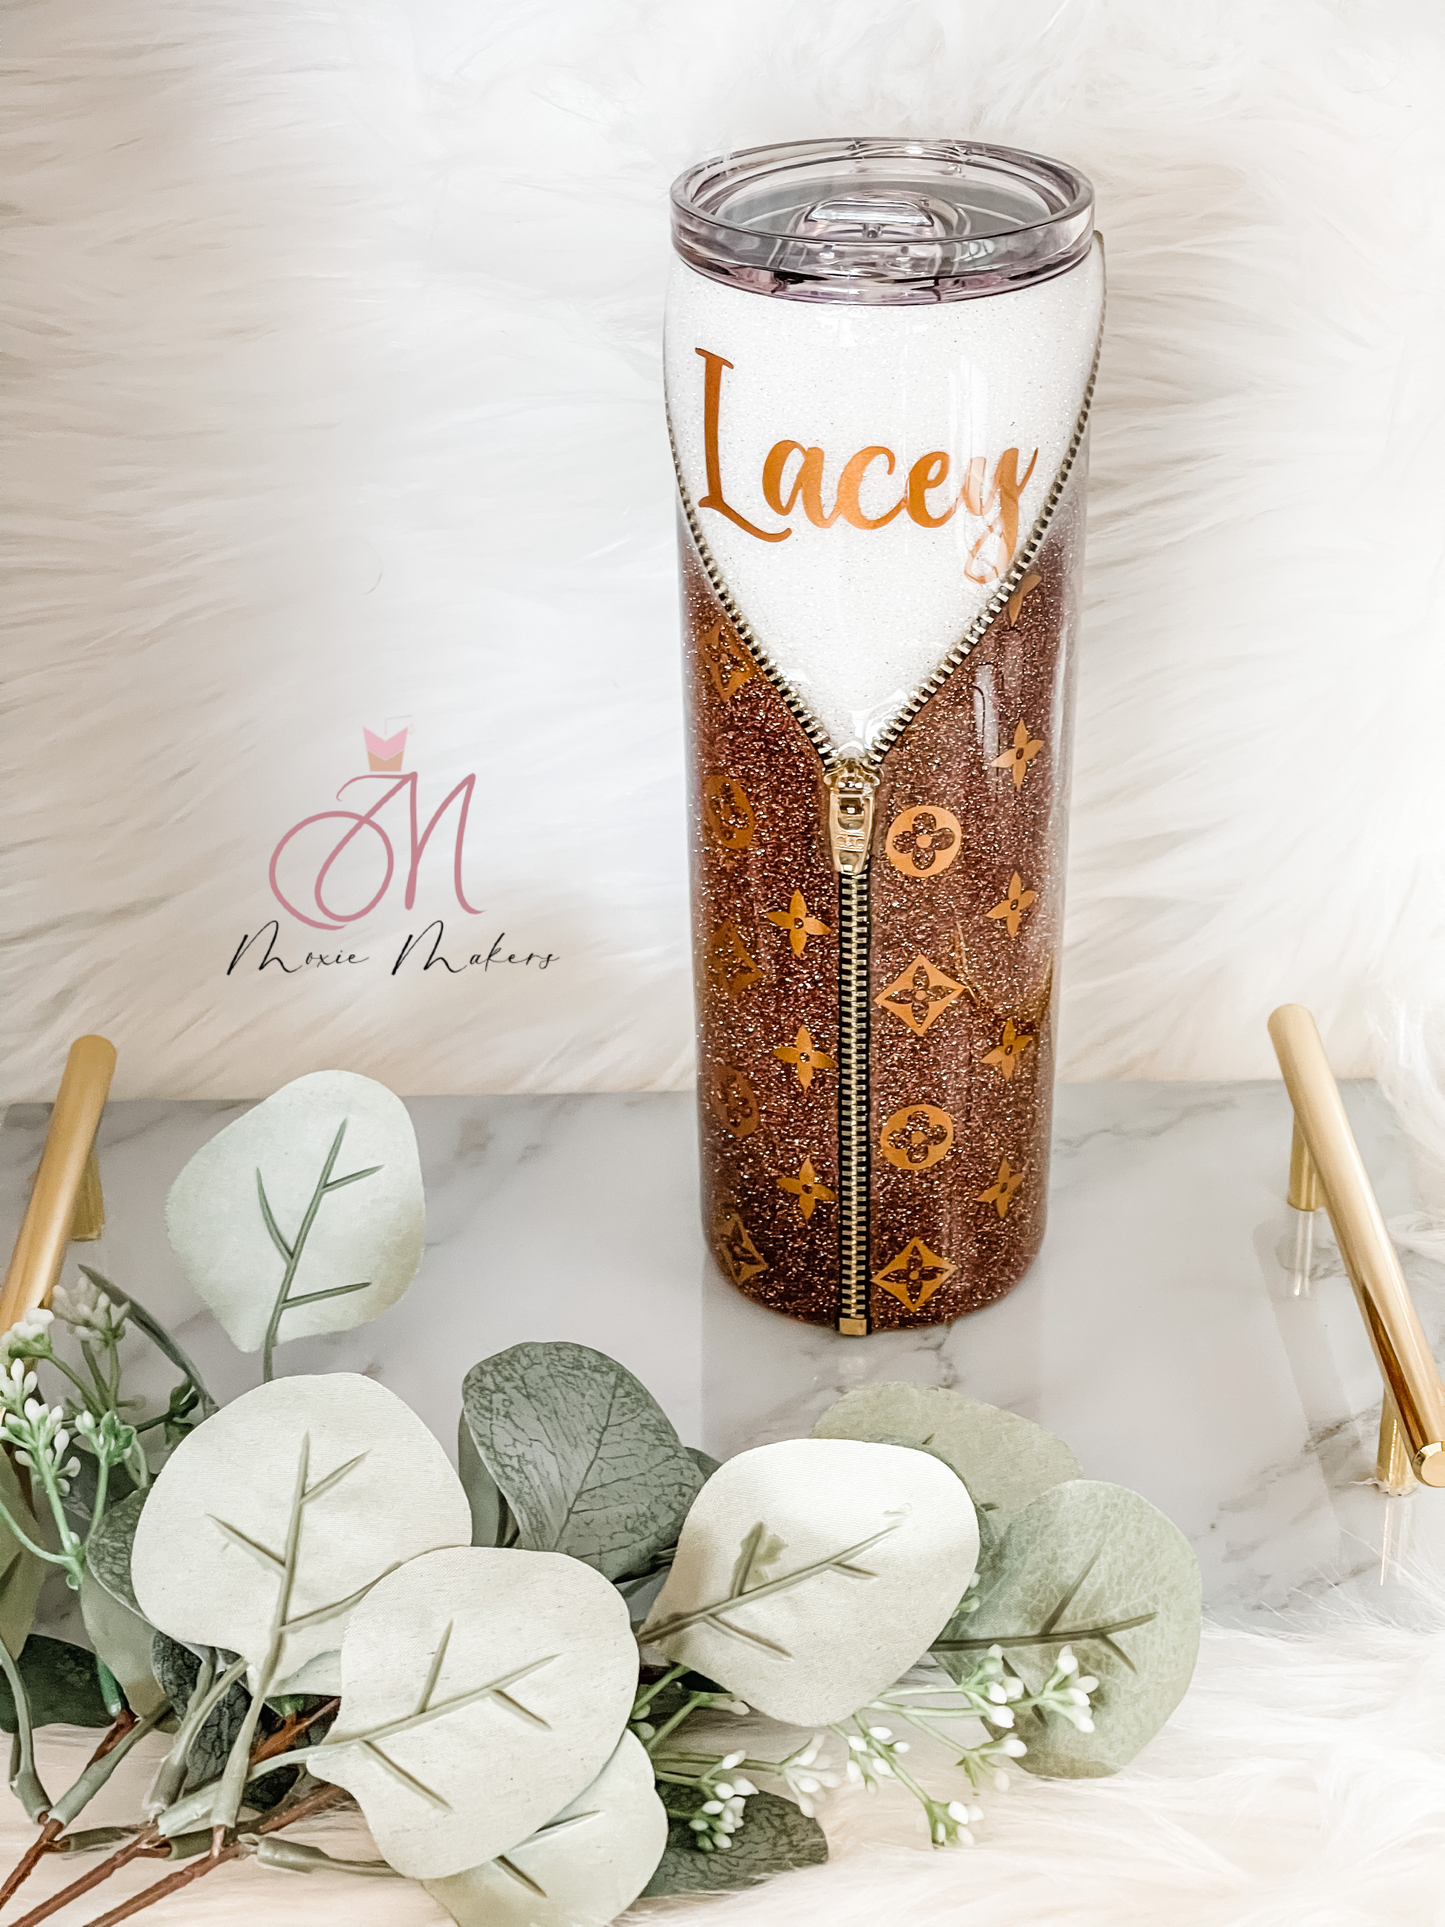 LOUIS VUITTON  Yeti cup designs, Glitter tumbler cups, Custom tumbler cups